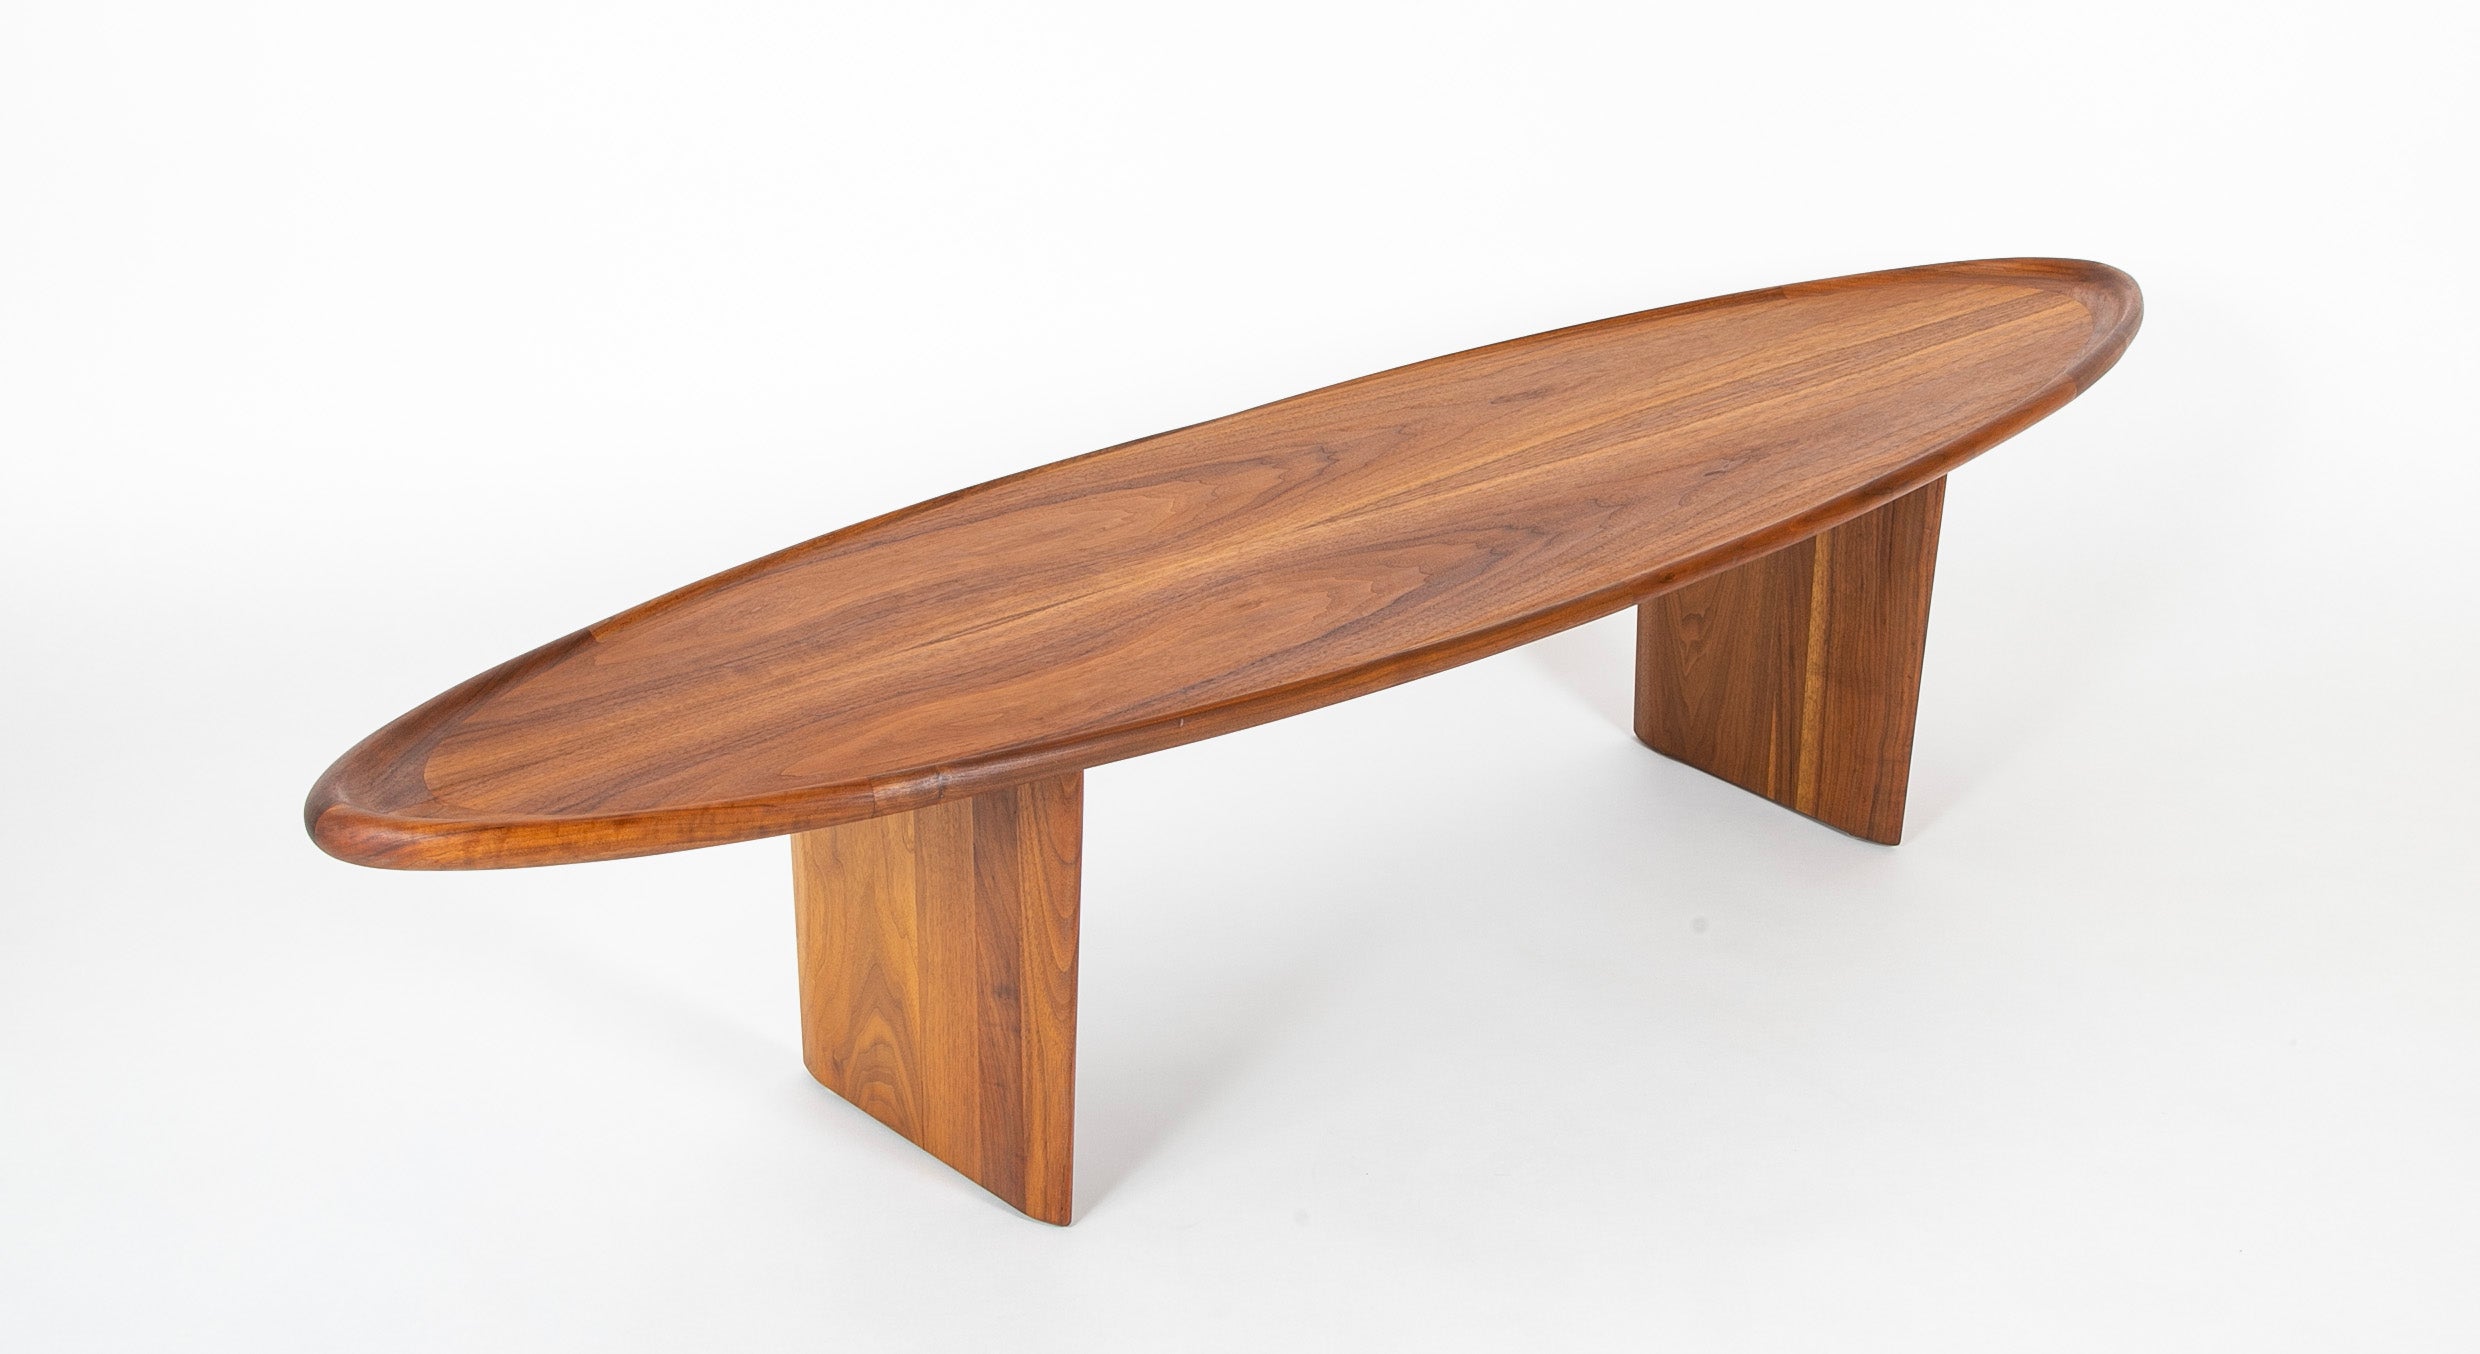 A Rare Walnut "Surfboard" Coffee Table by Robsjohn-Gibbings for Widdicomb